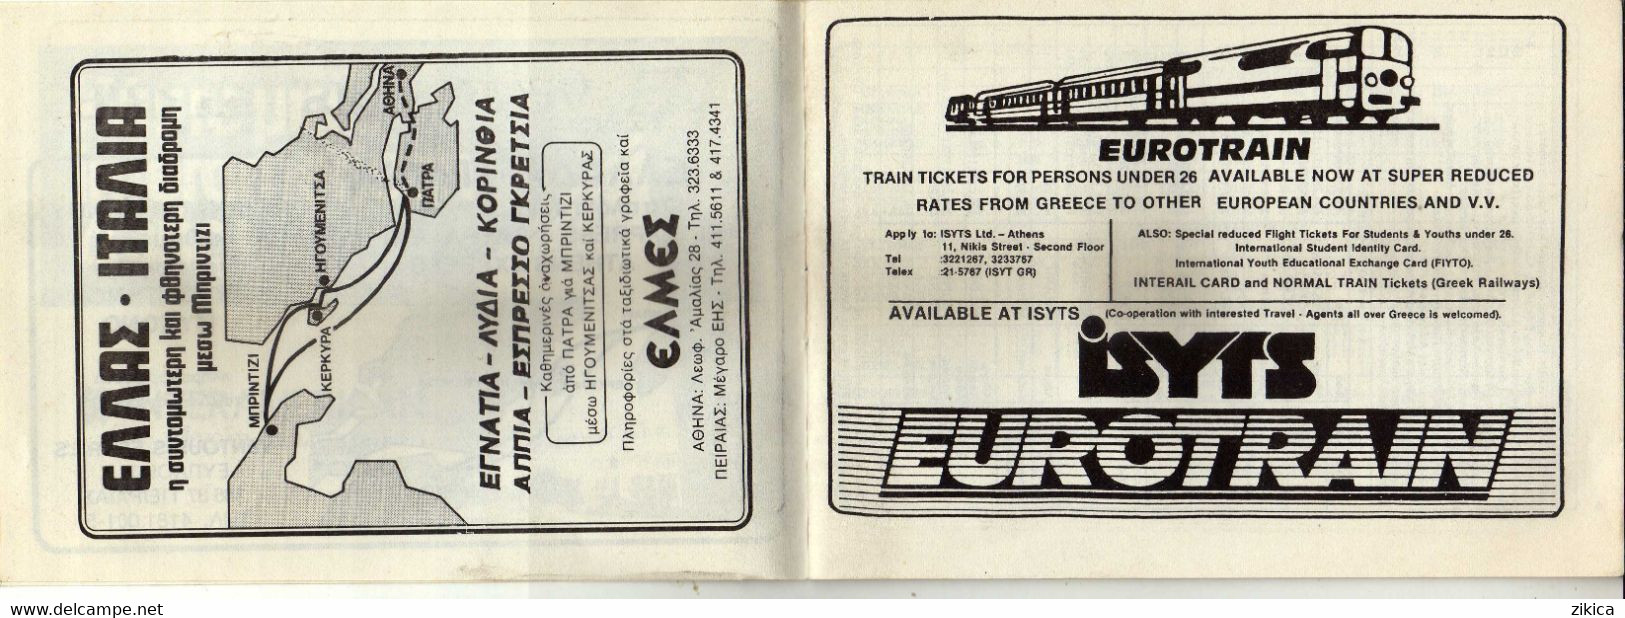 Transportation Plan - Greece Railway 1988 - Europe